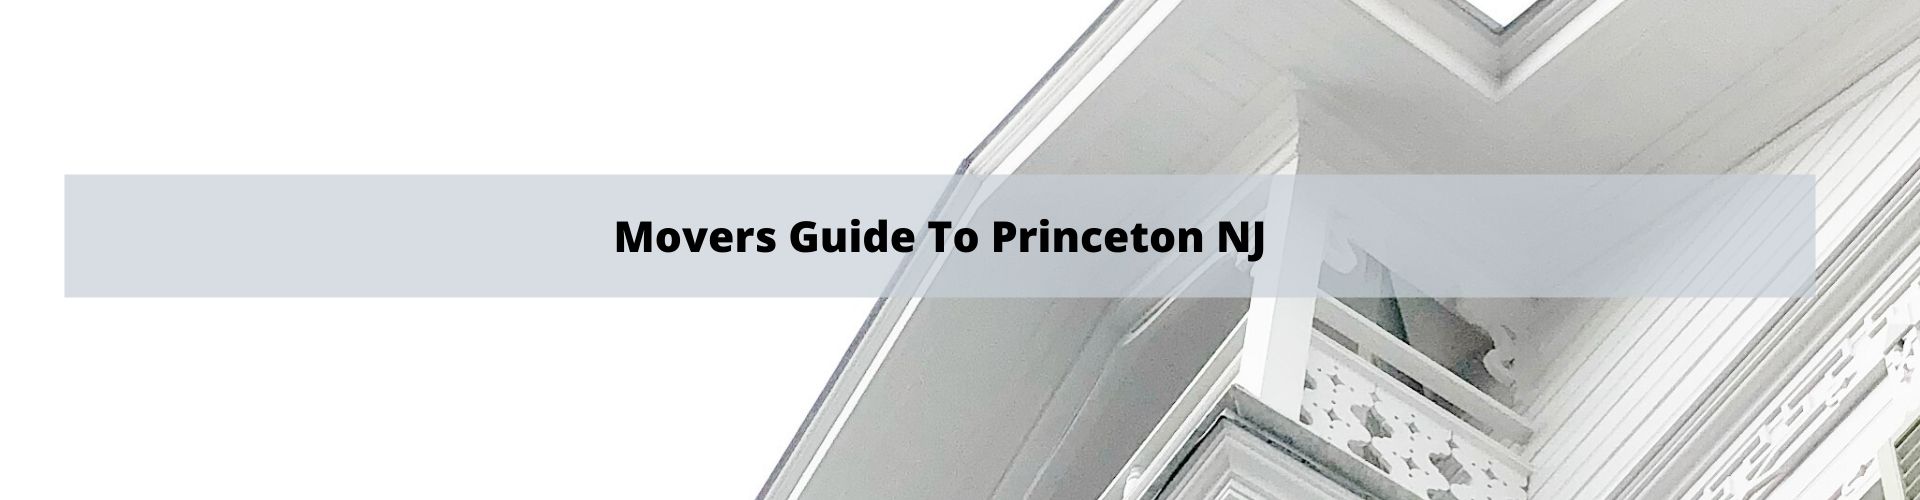 Princeton NJ Movers Guide